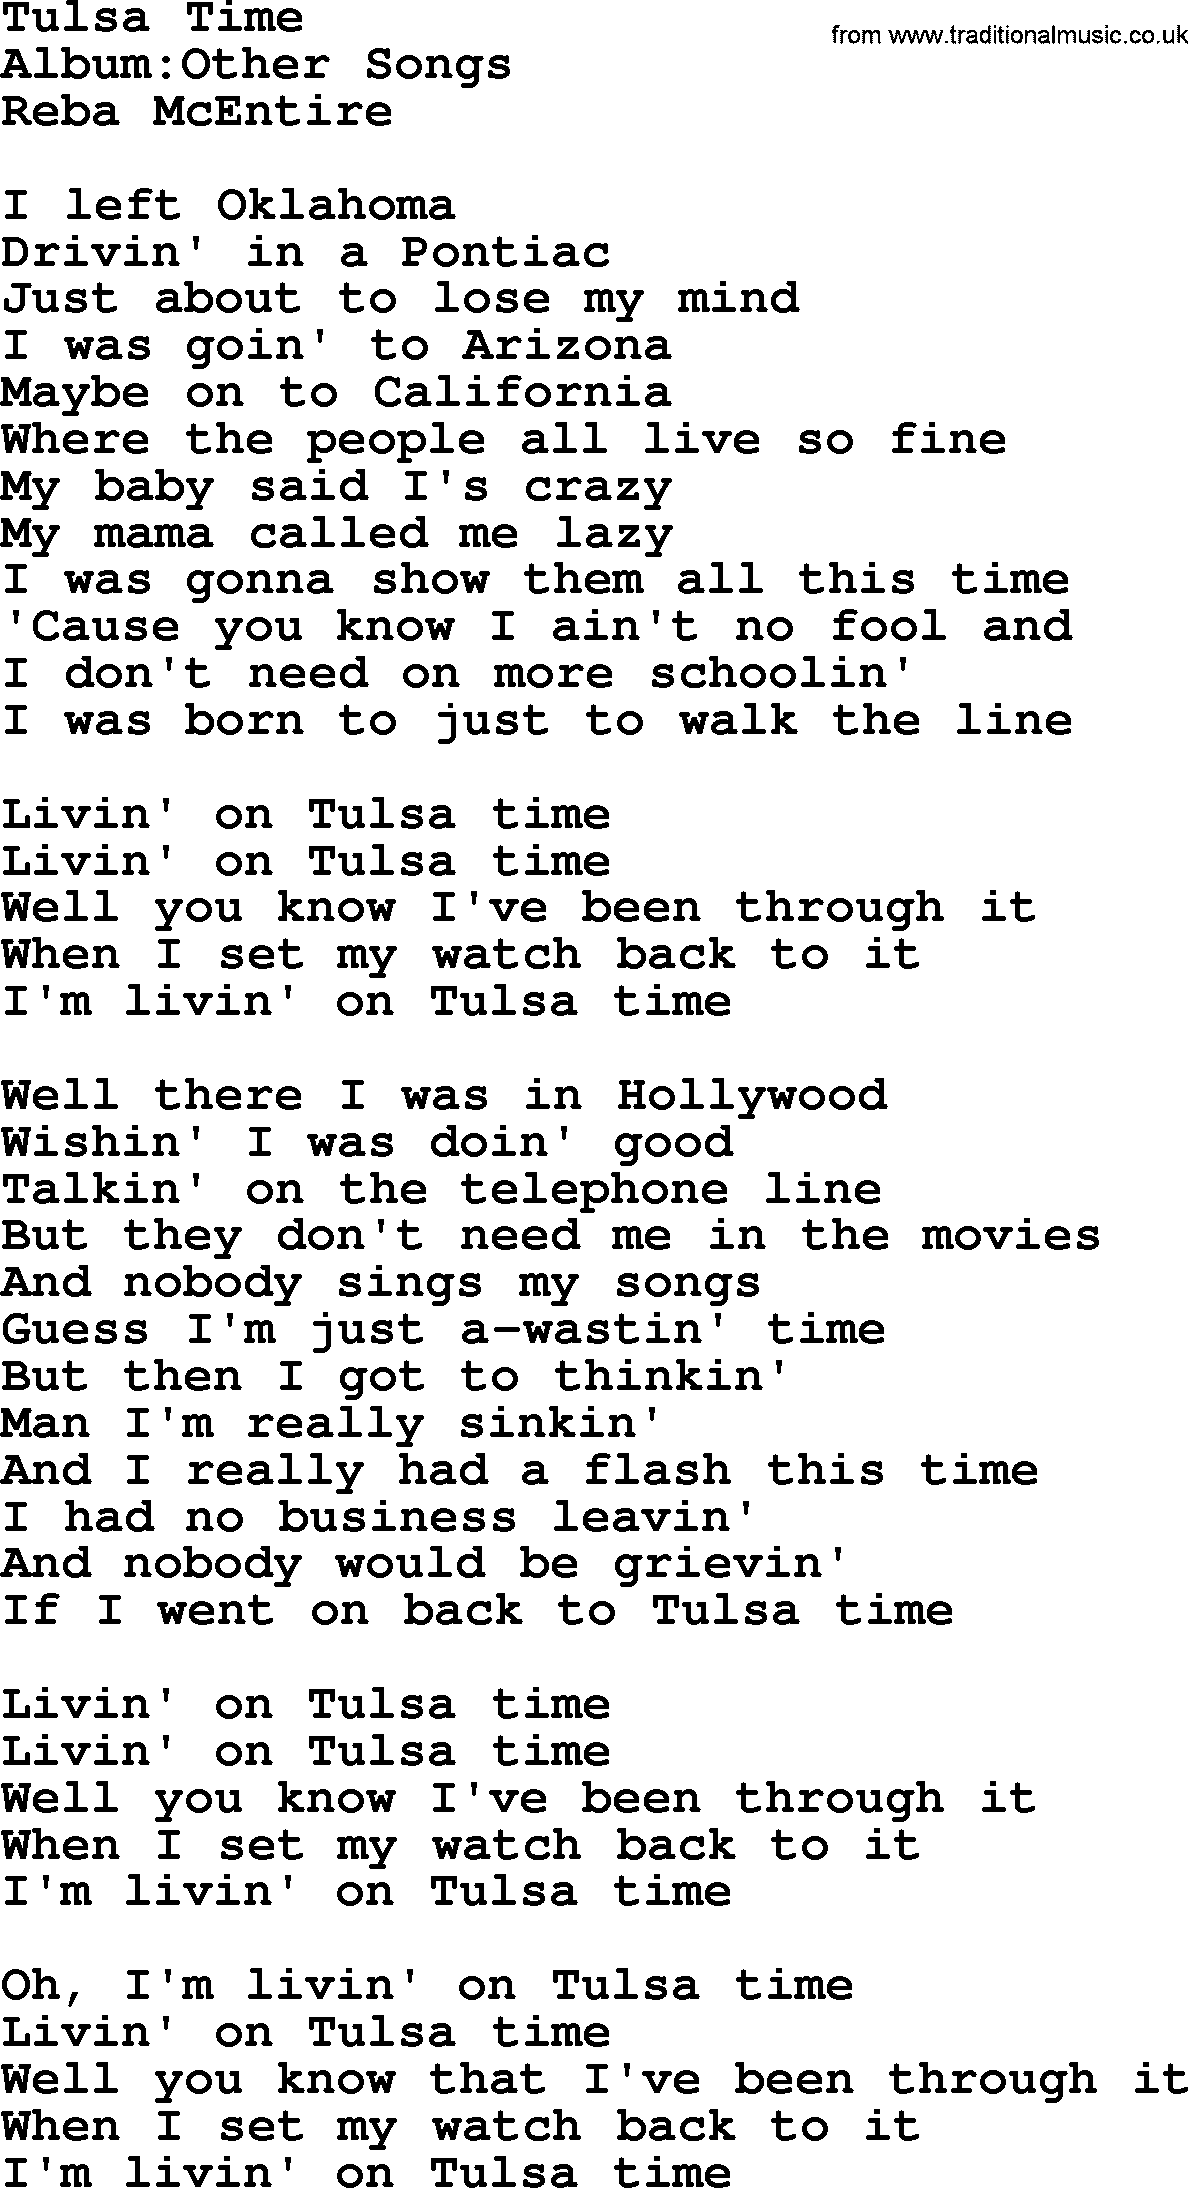 Reba McEntire song: Tulsa Time lyrics